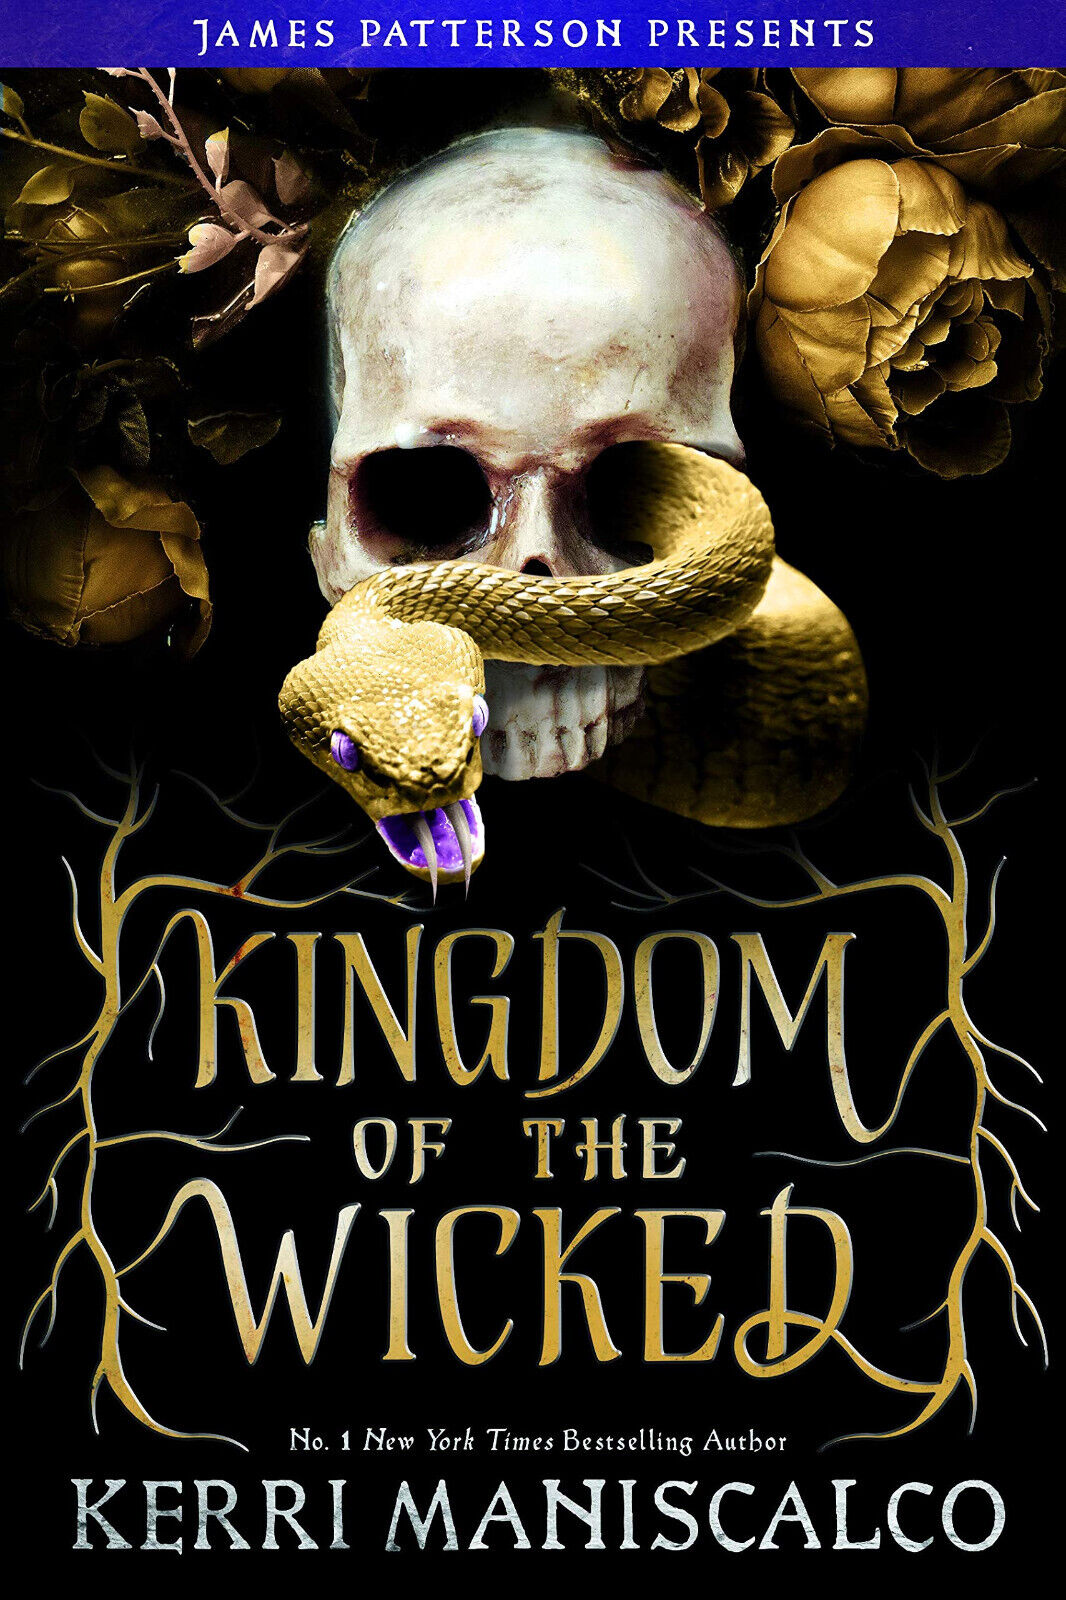 Kingdom of the Wicked -  Kerri Maniscalco - JIMMY PATTERSON, 2020